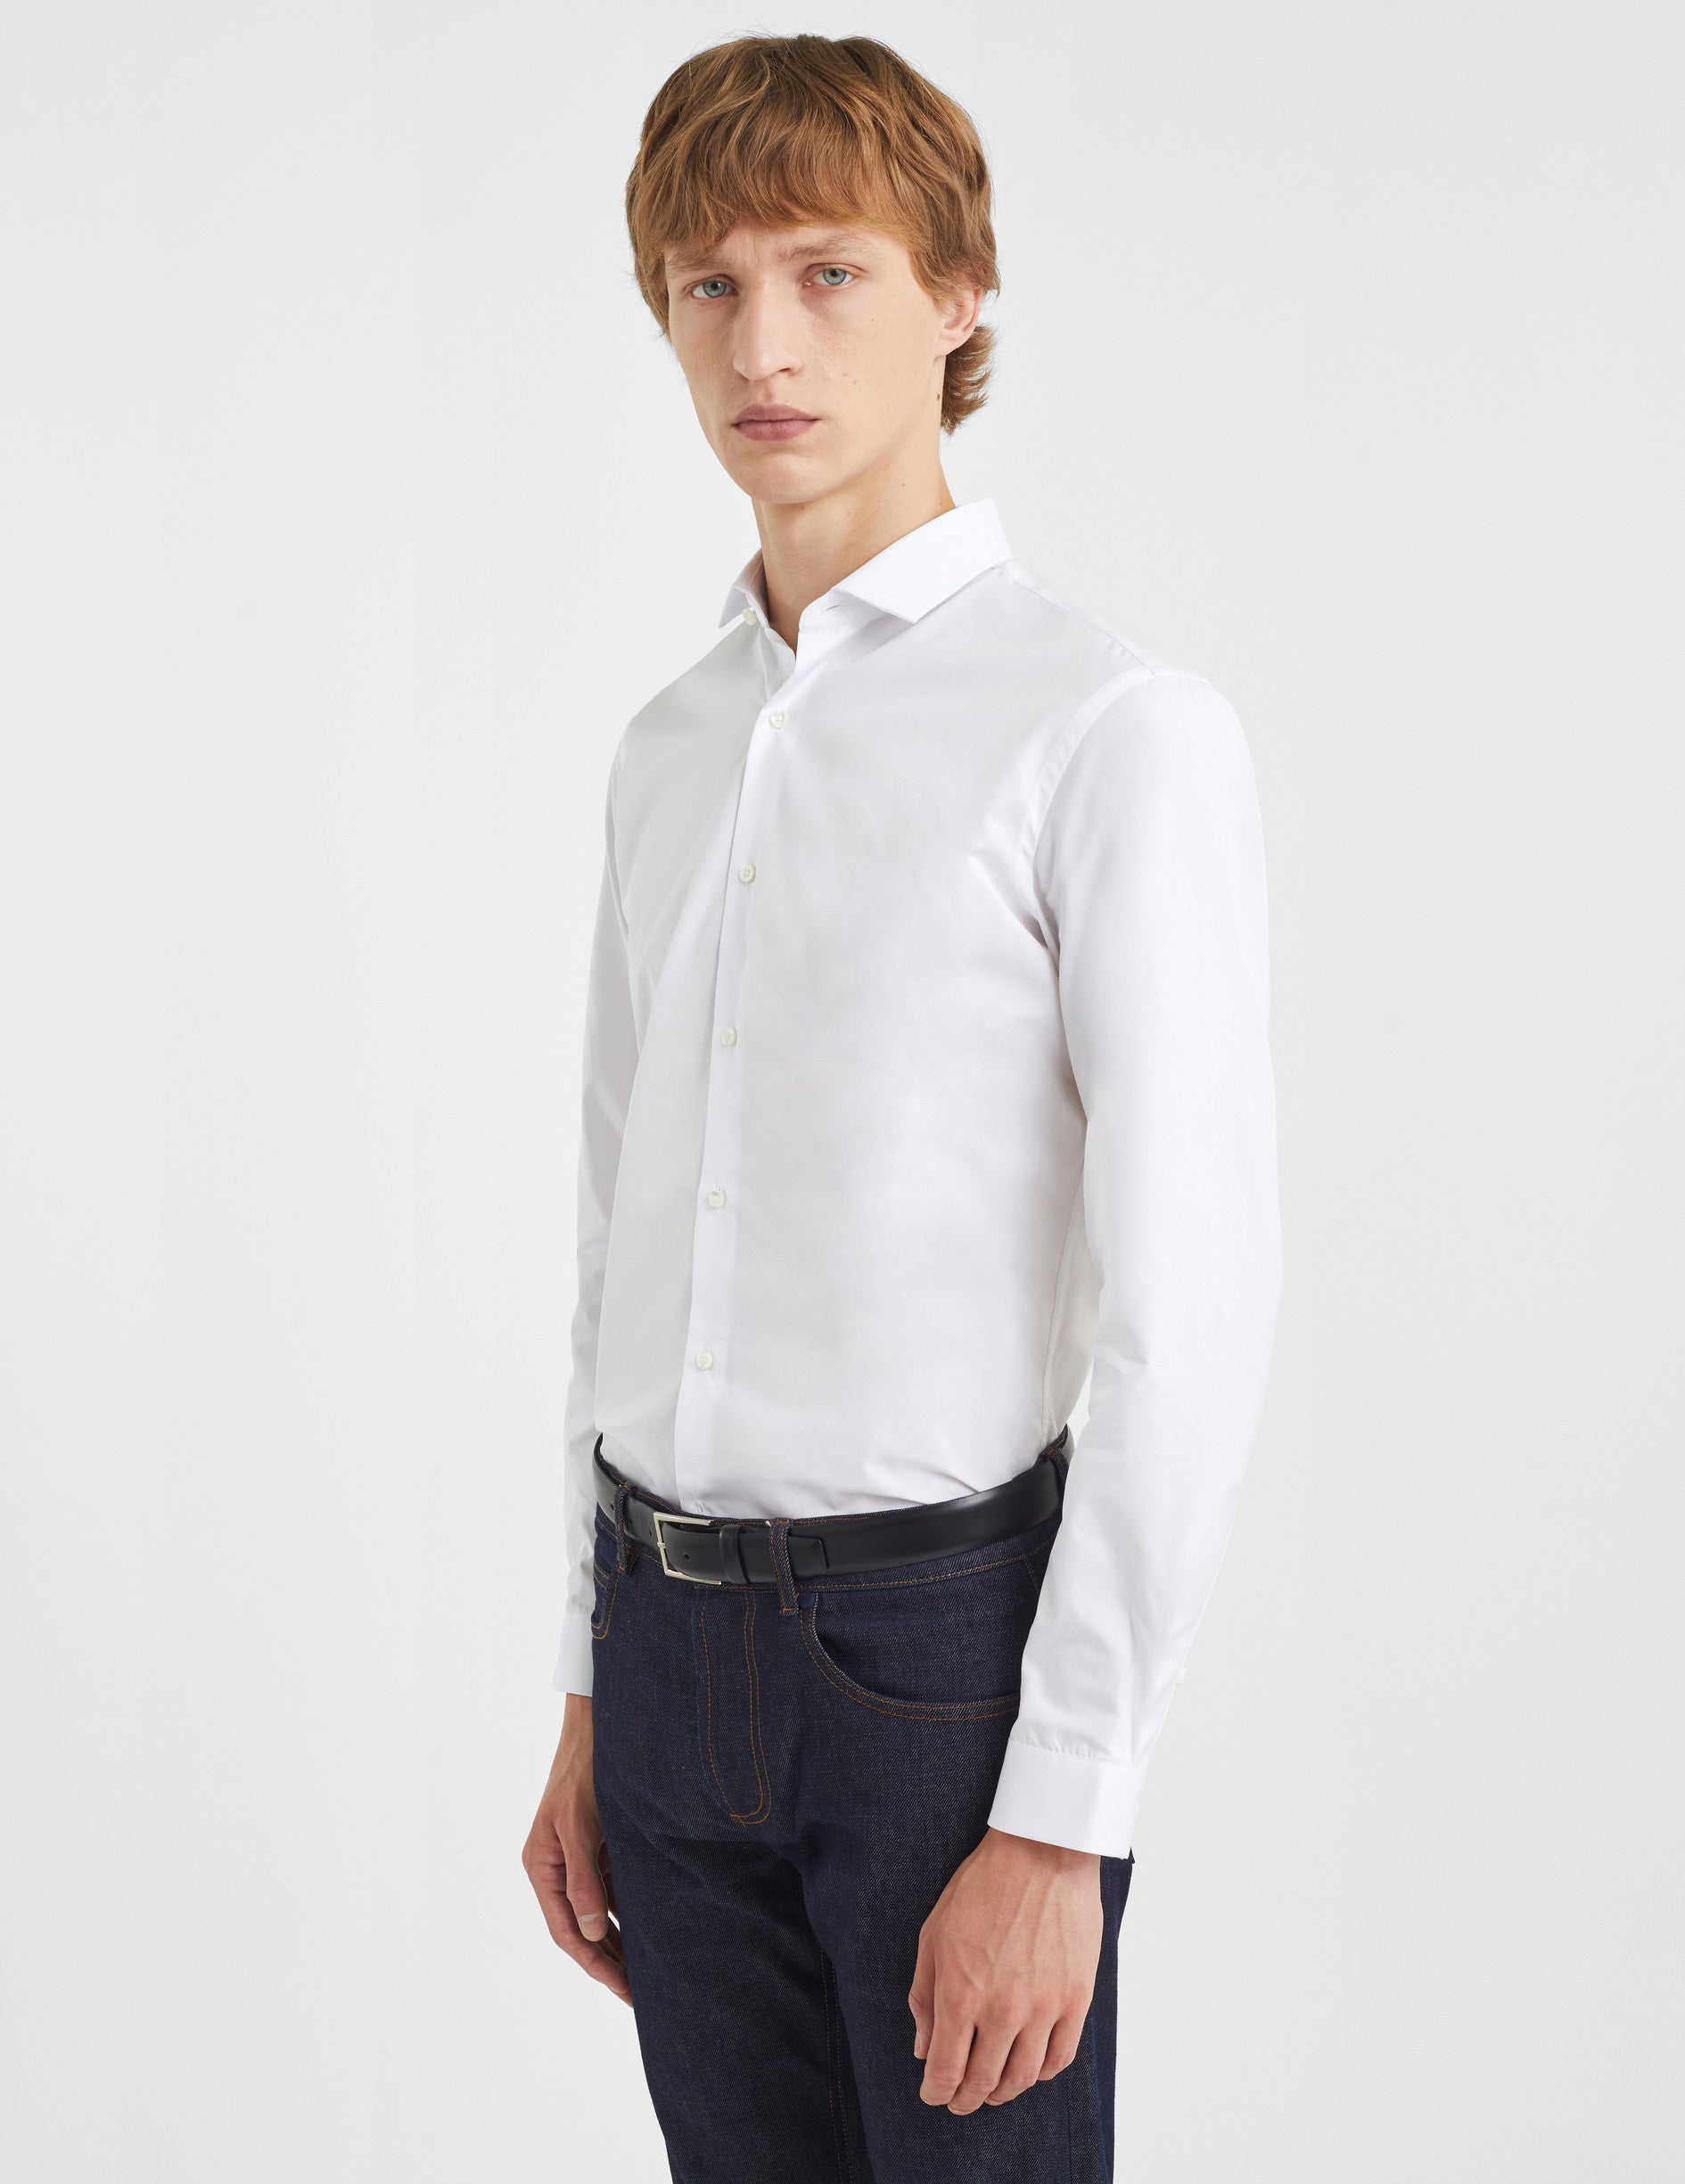 Fitted white shirt - Poplin - Thin Collar